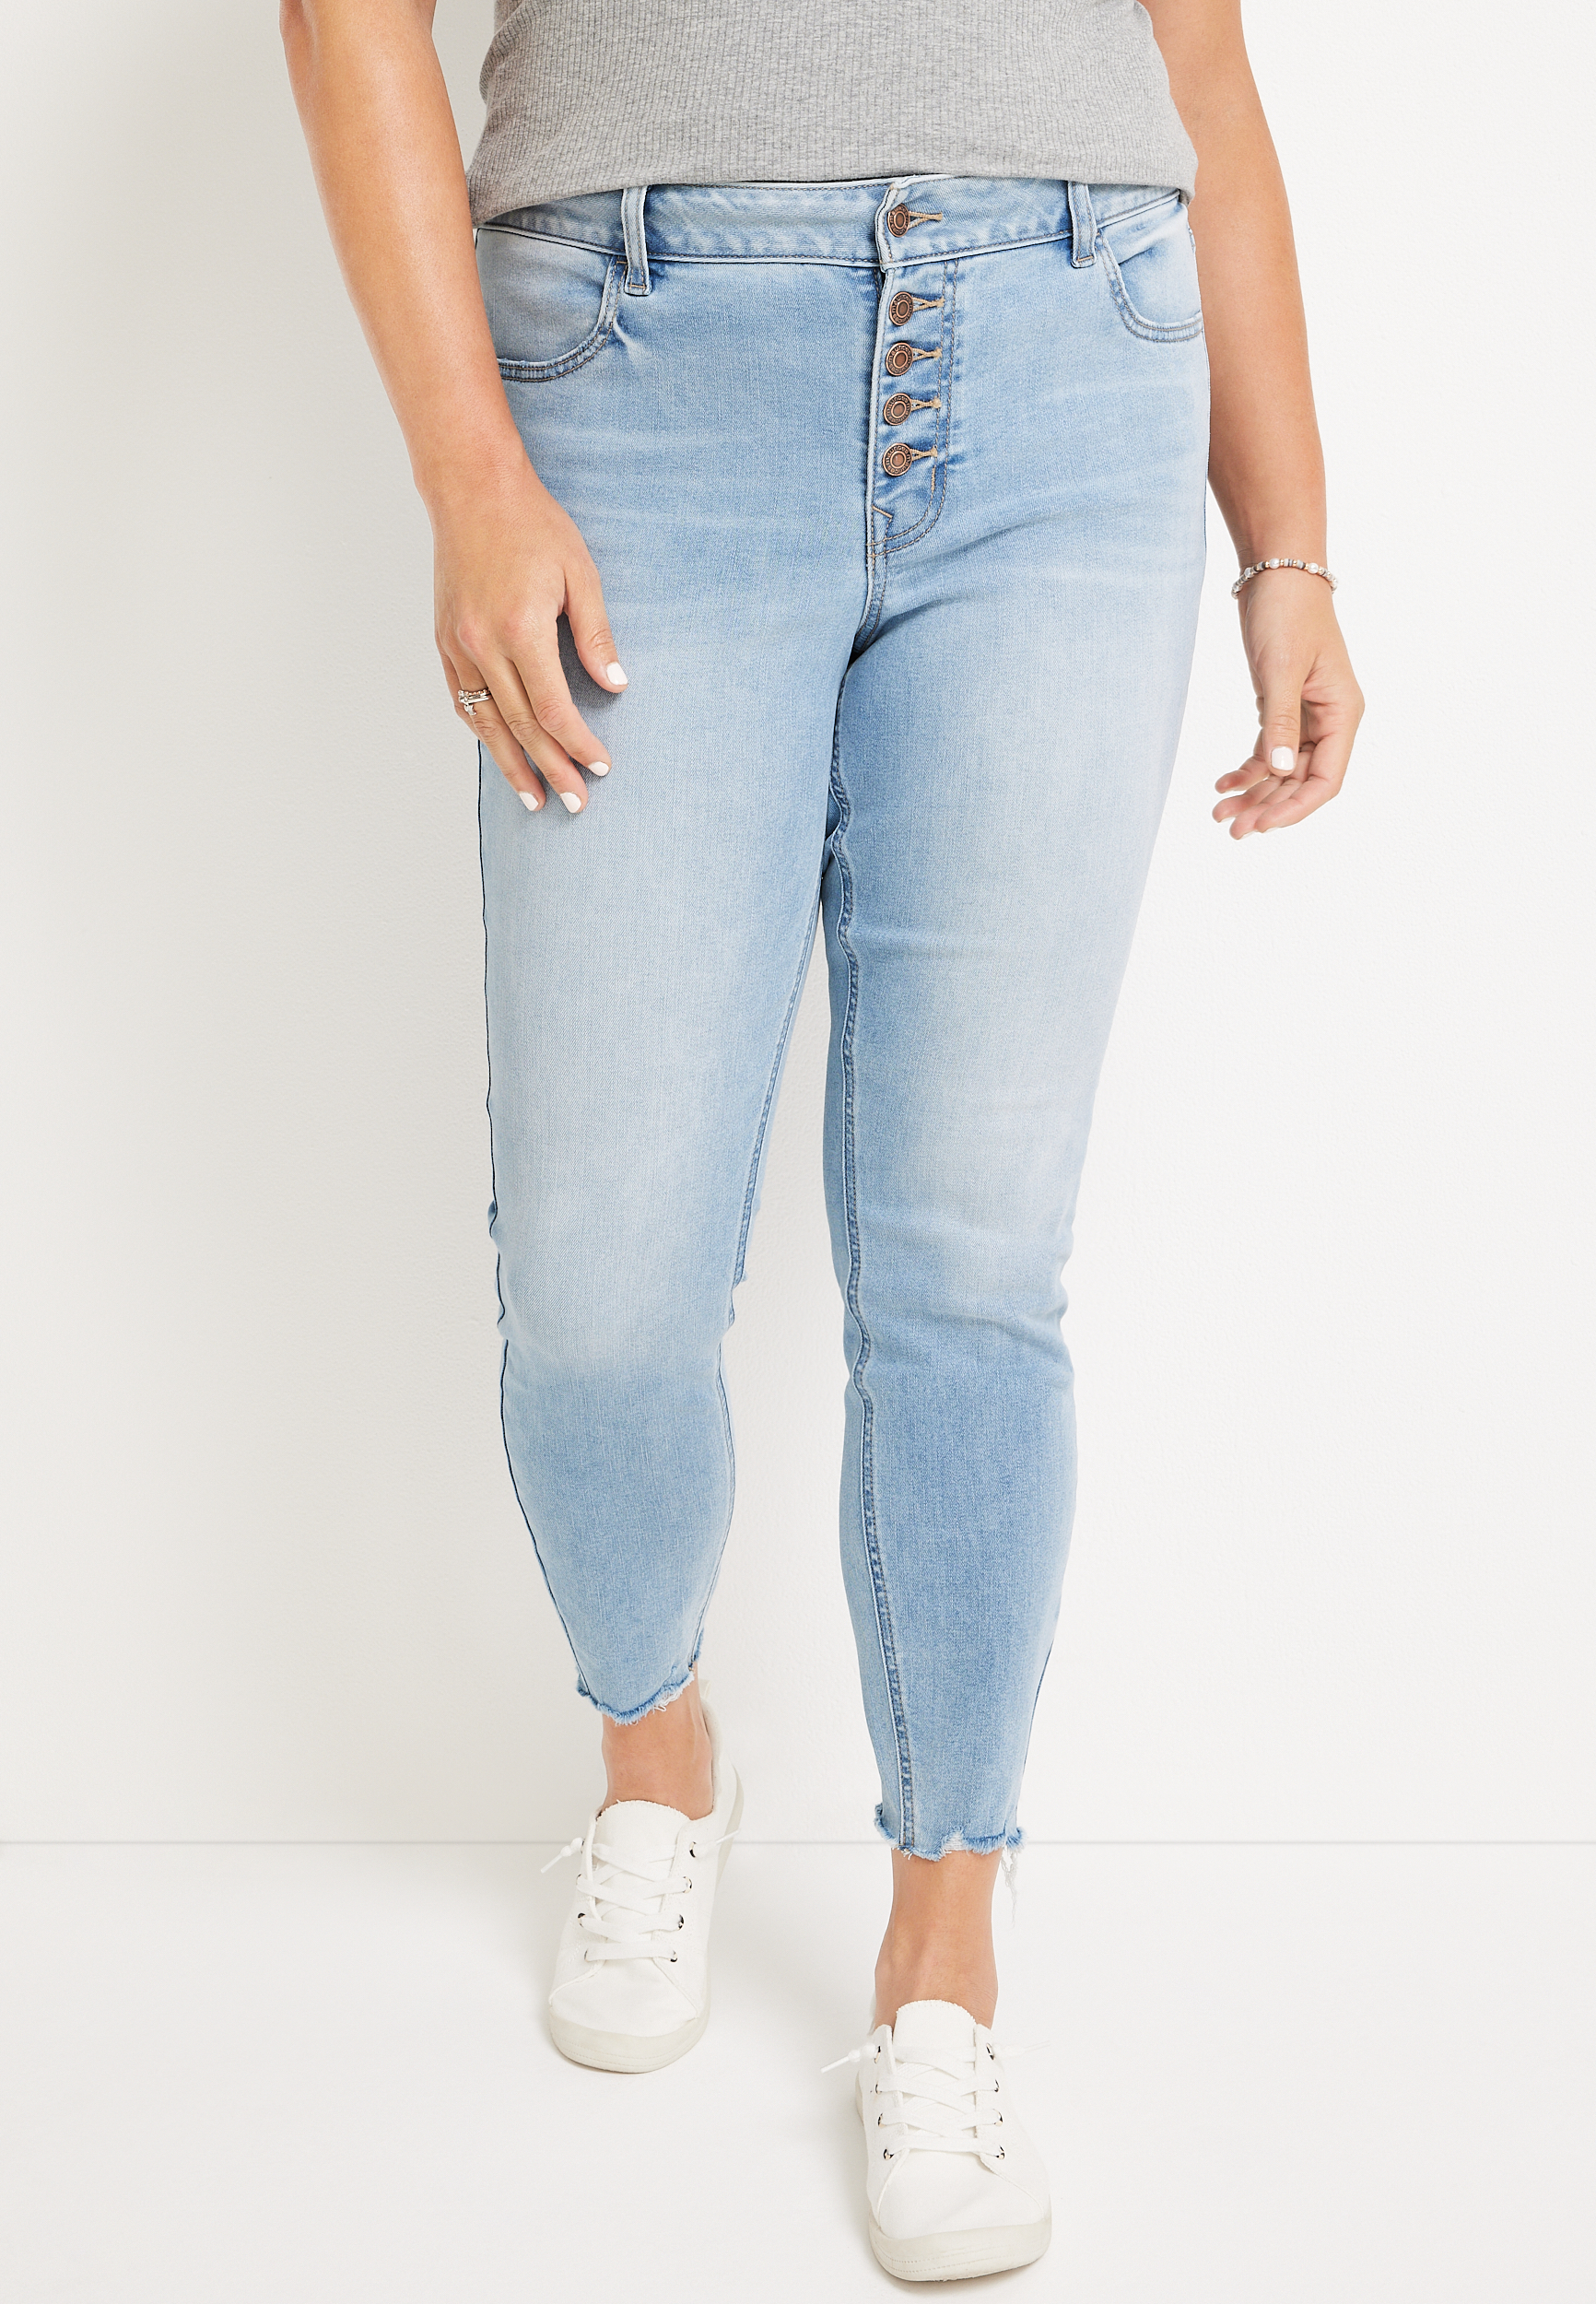 Women's Plus Size Casual Comfy Slim Pocket Jeggings Jean Pants